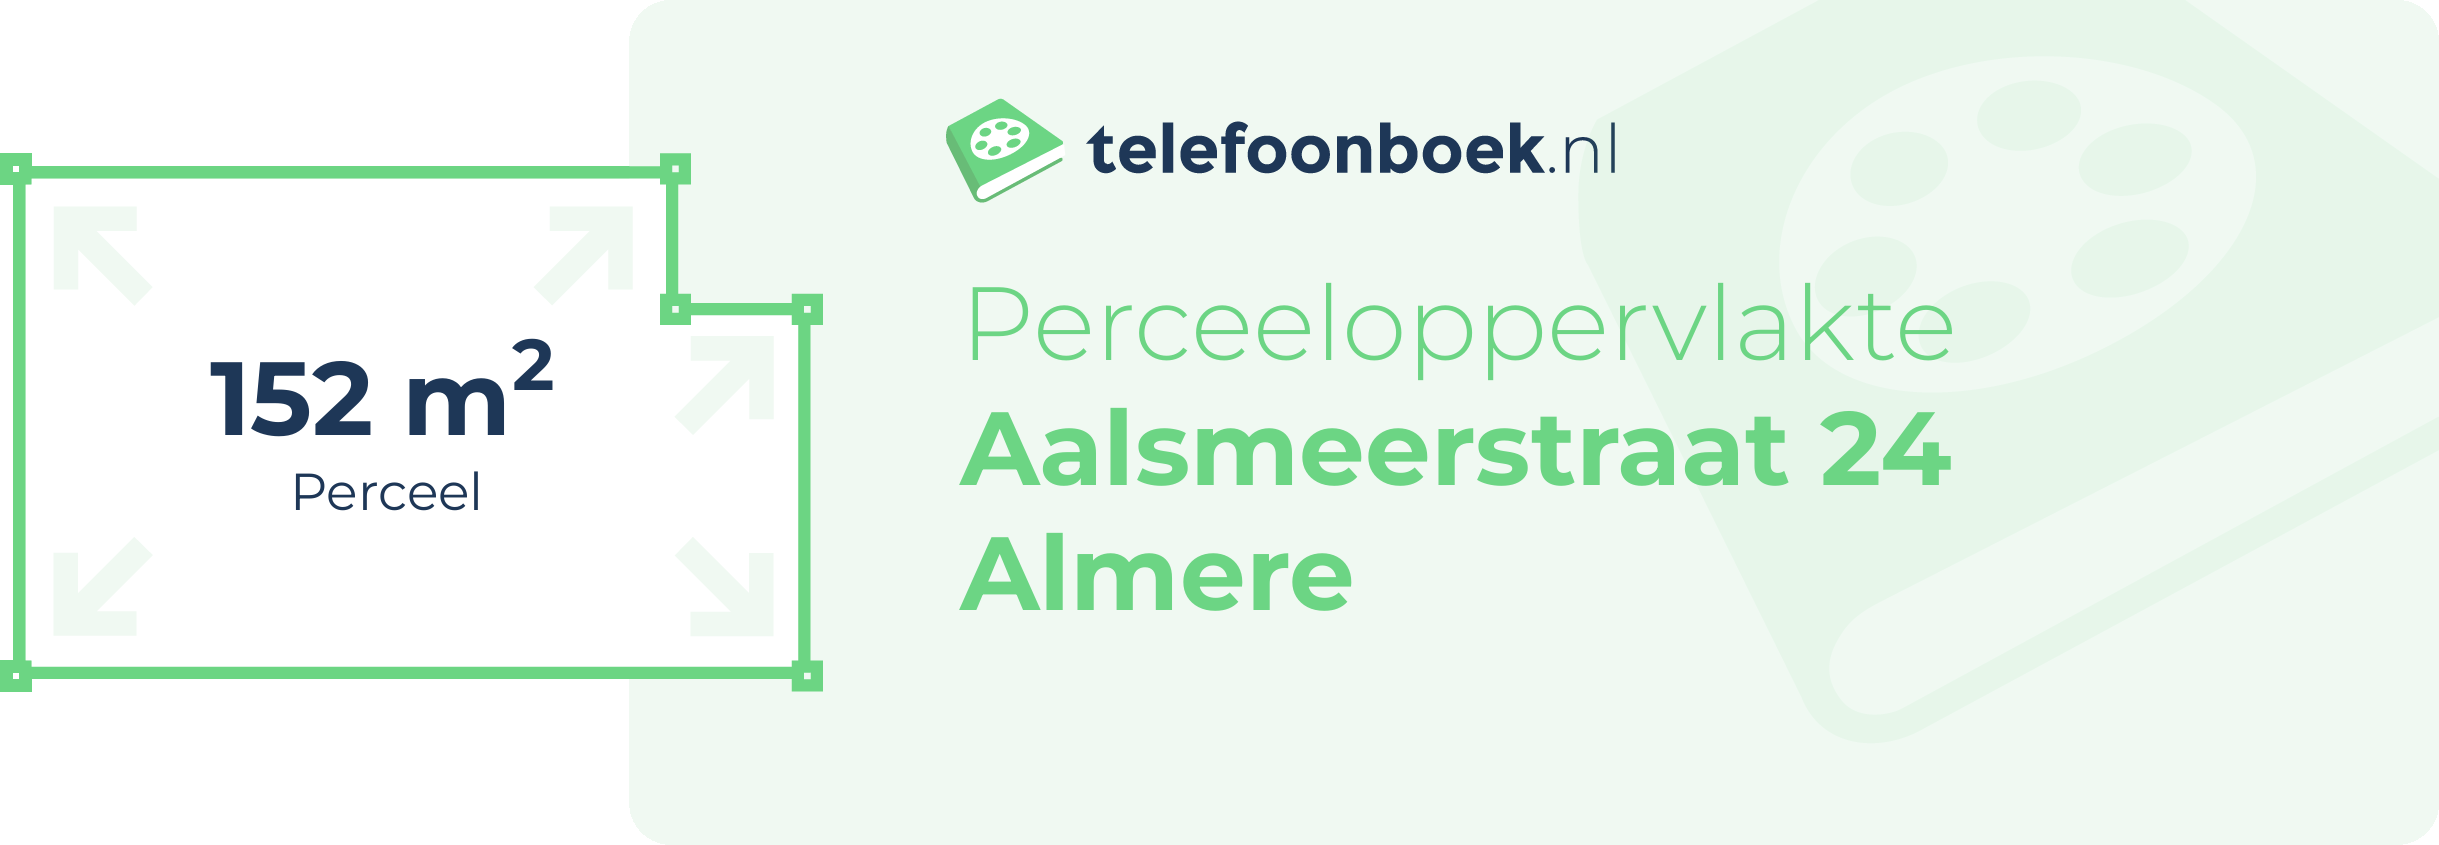 Perceeloppervlakte Aalsmeerstraat 24 Almere